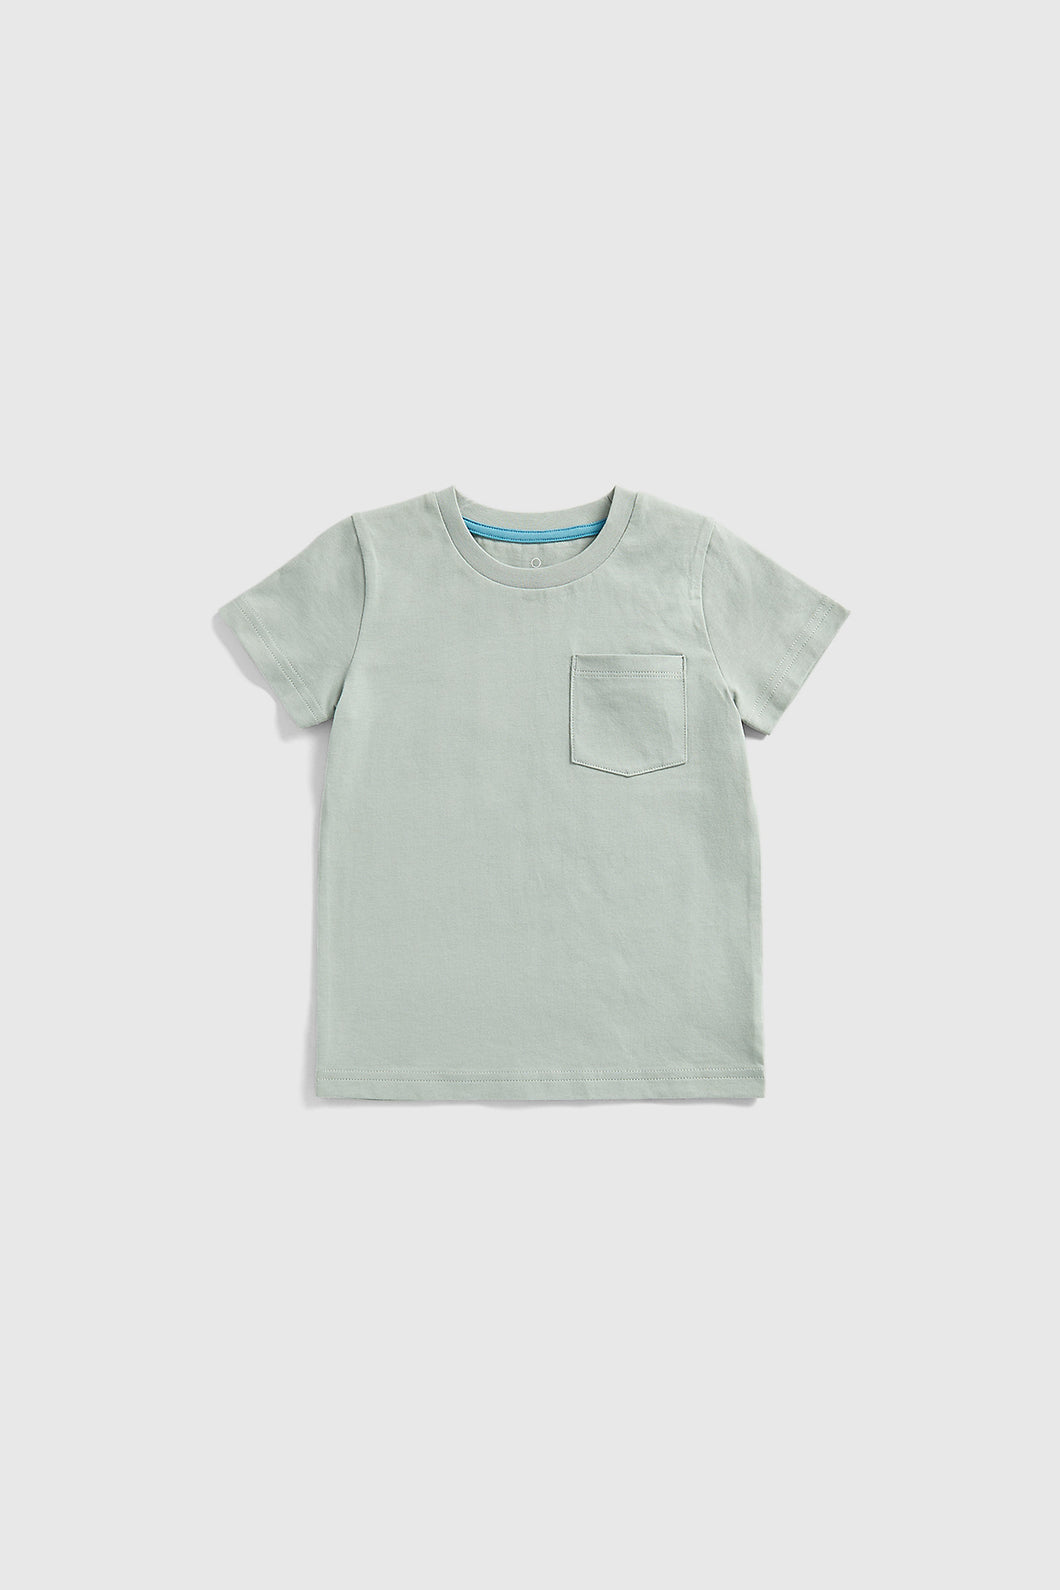 Mothercare Green T-Shirt